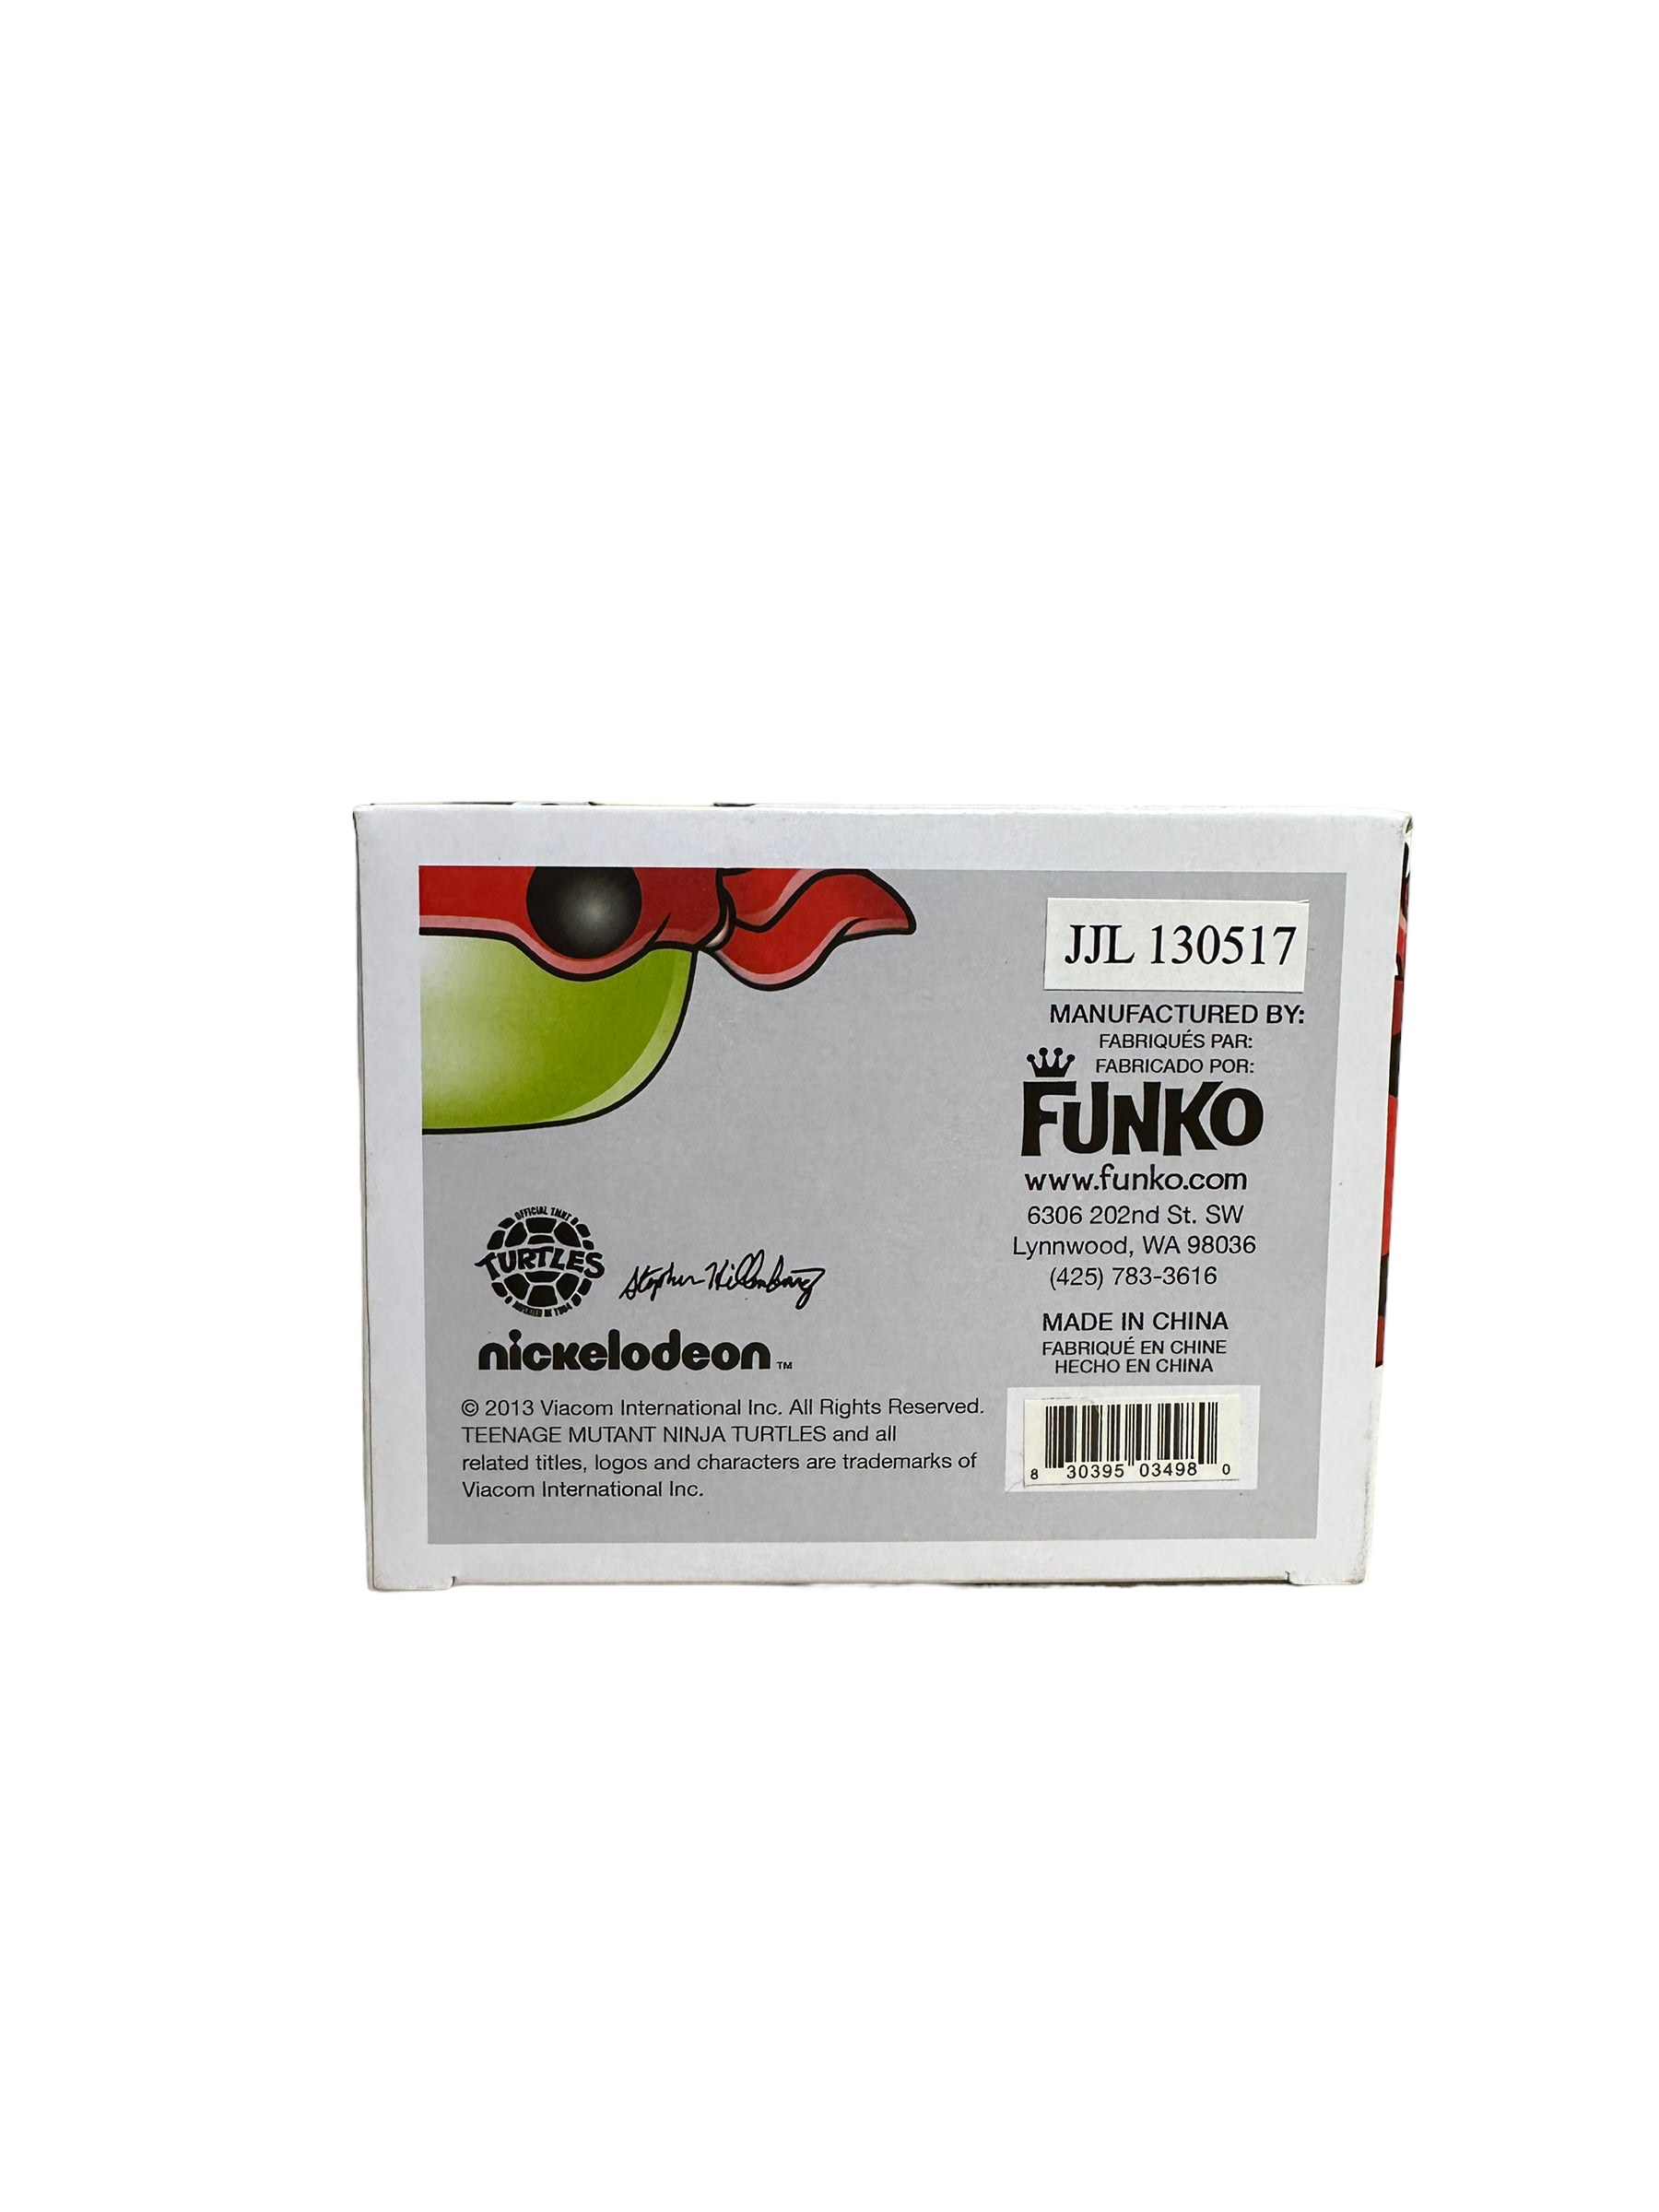 Teenage Mutant Ninja Turtles (Metallic) Funko Pop Set! - SDCC 2013 Exclusives LE1008 Pcs each - Condition varies